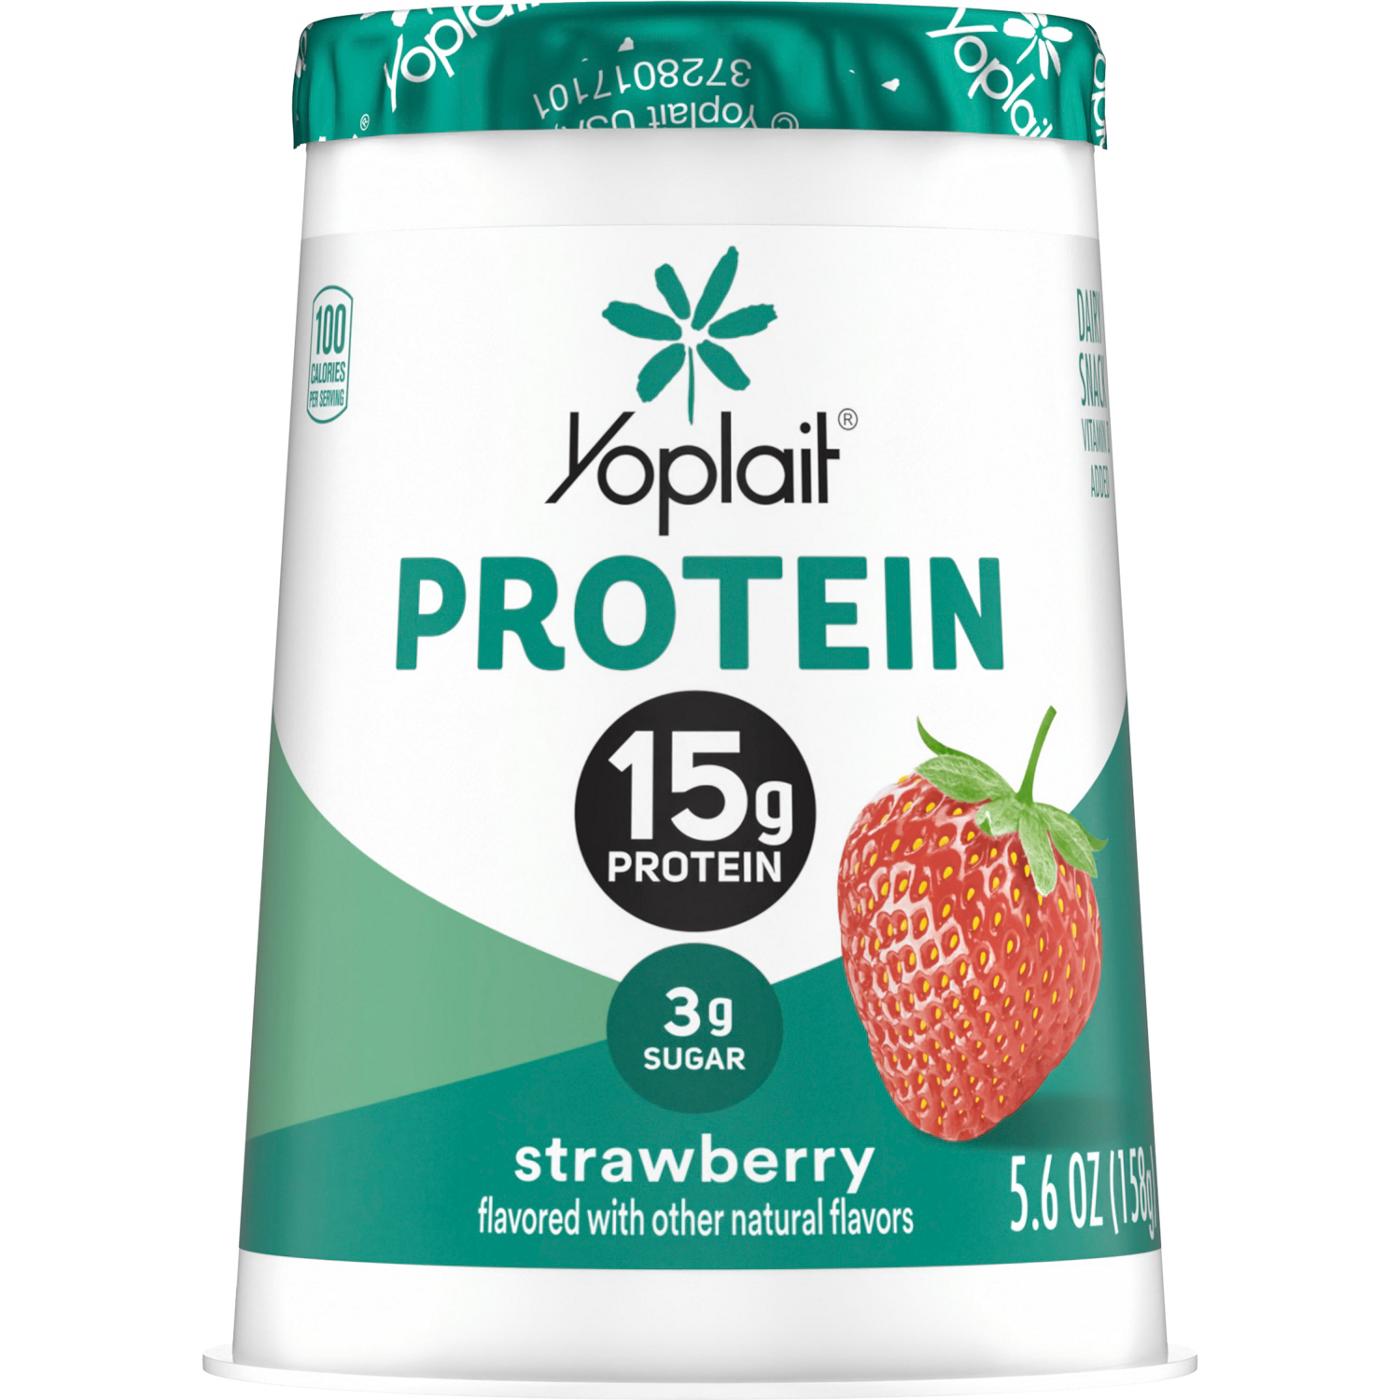 Yoplait 15g Protein Strawberry Yogurt; image 1 of 4